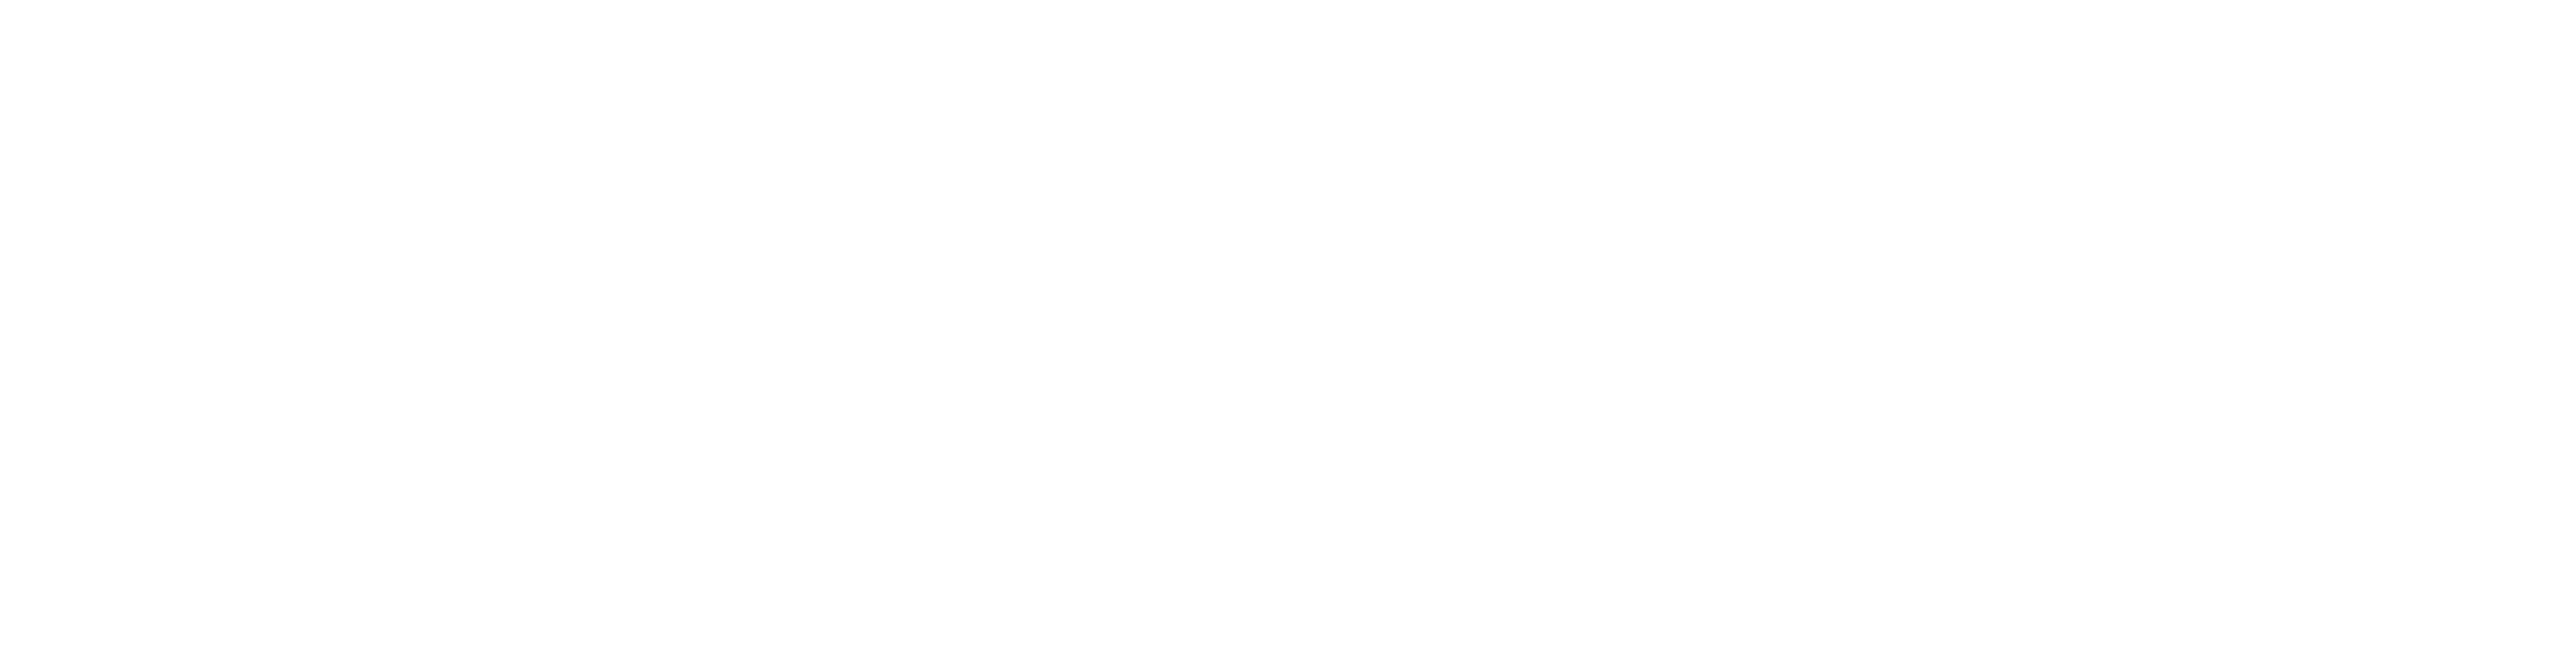 FlexScreen Resource Center - white